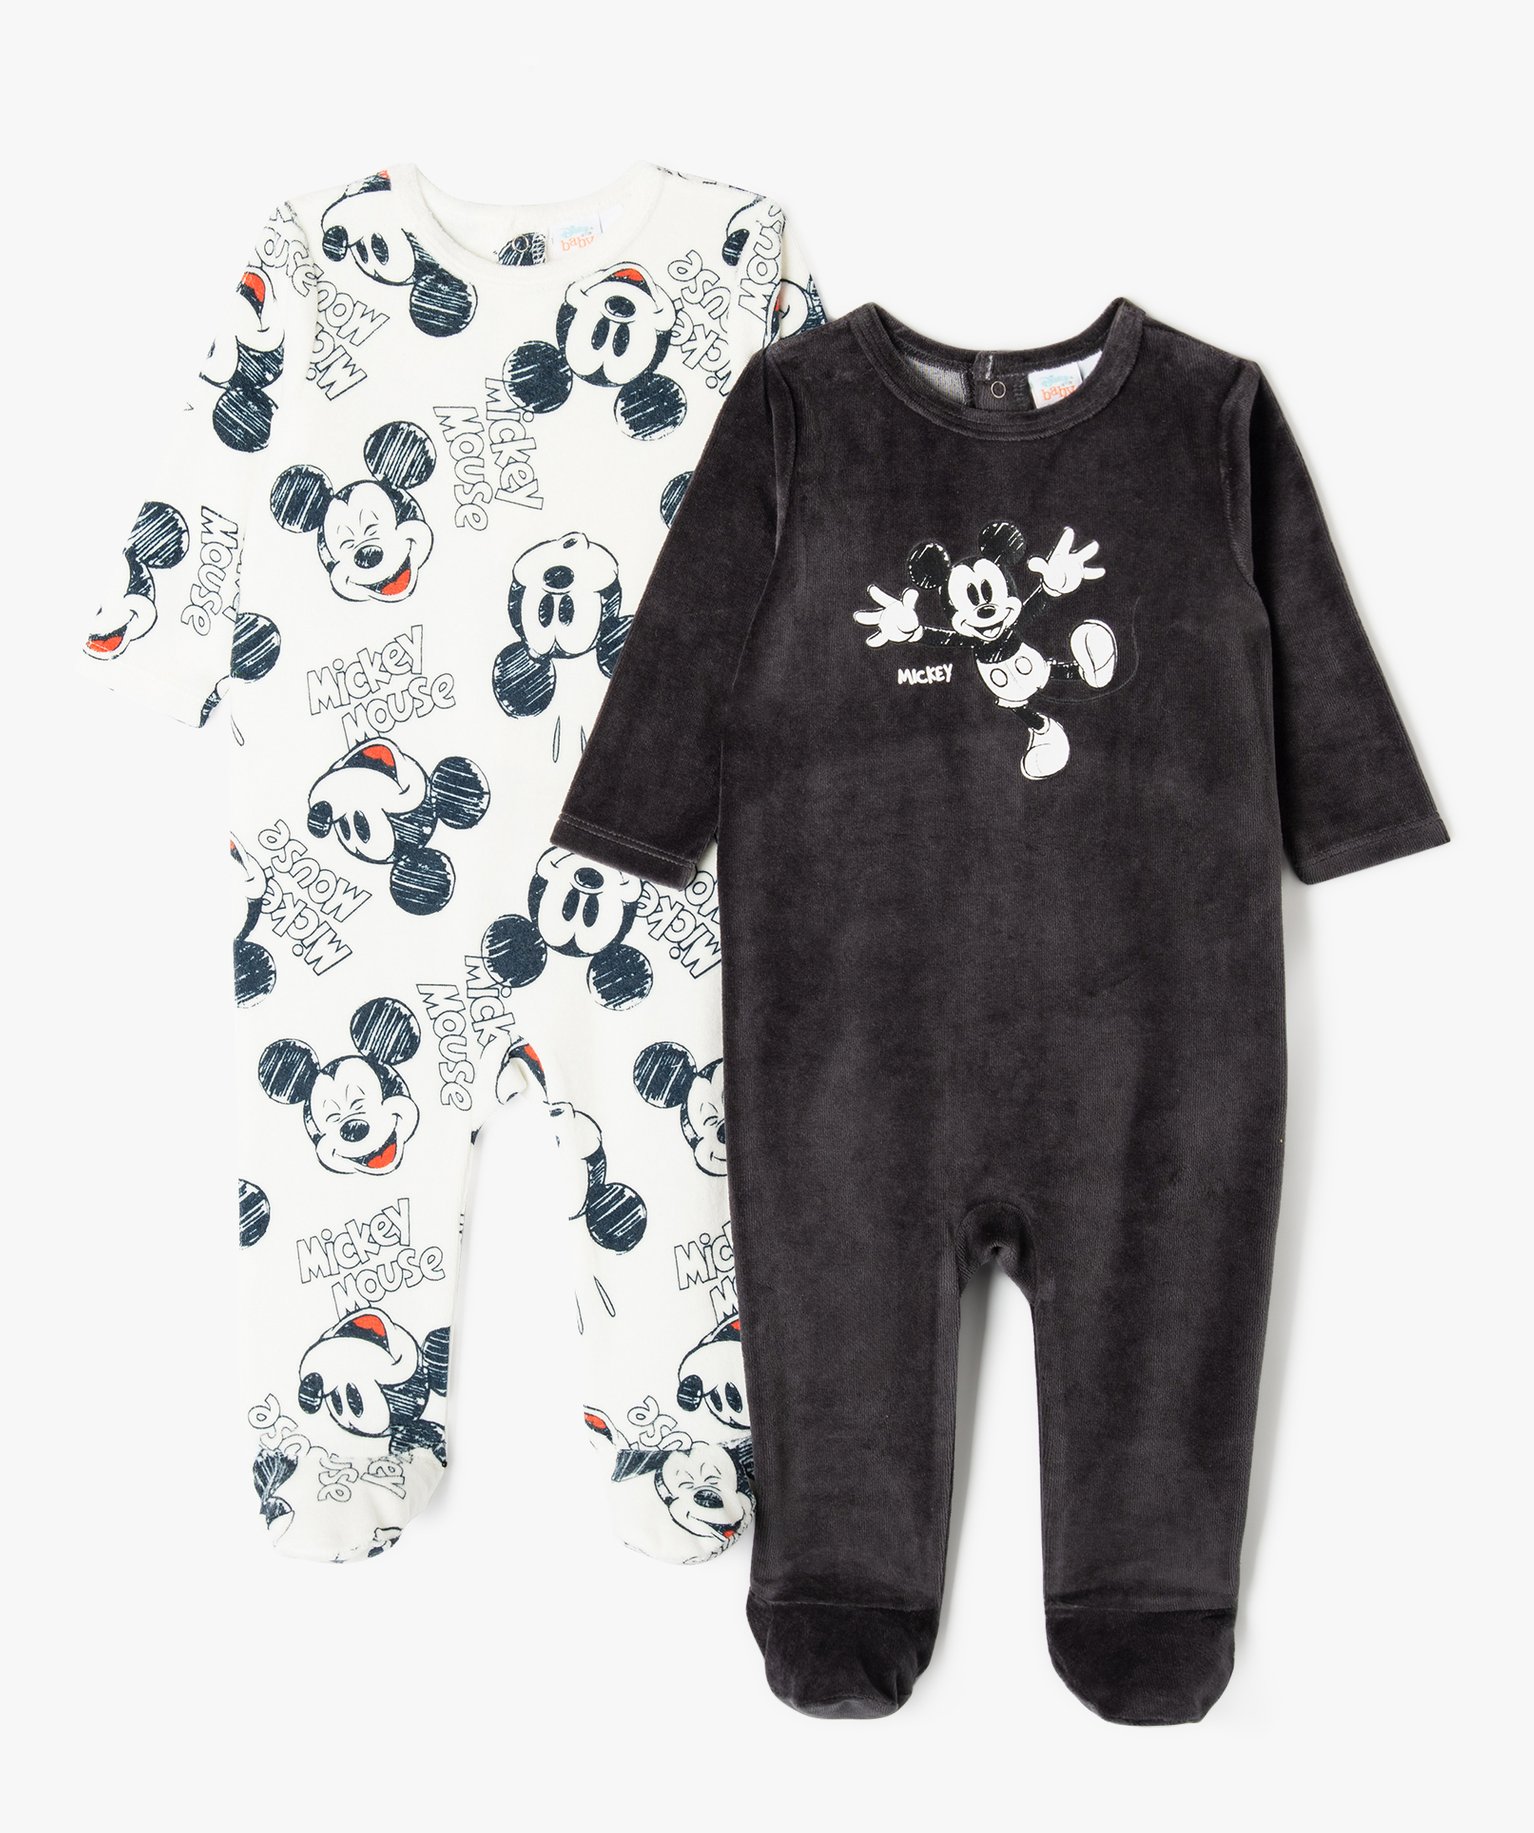 Pyjama velours avec motifs Mickey Mouse bébé garçon (lot de 2) - Disney Baby - DISNEY BABY